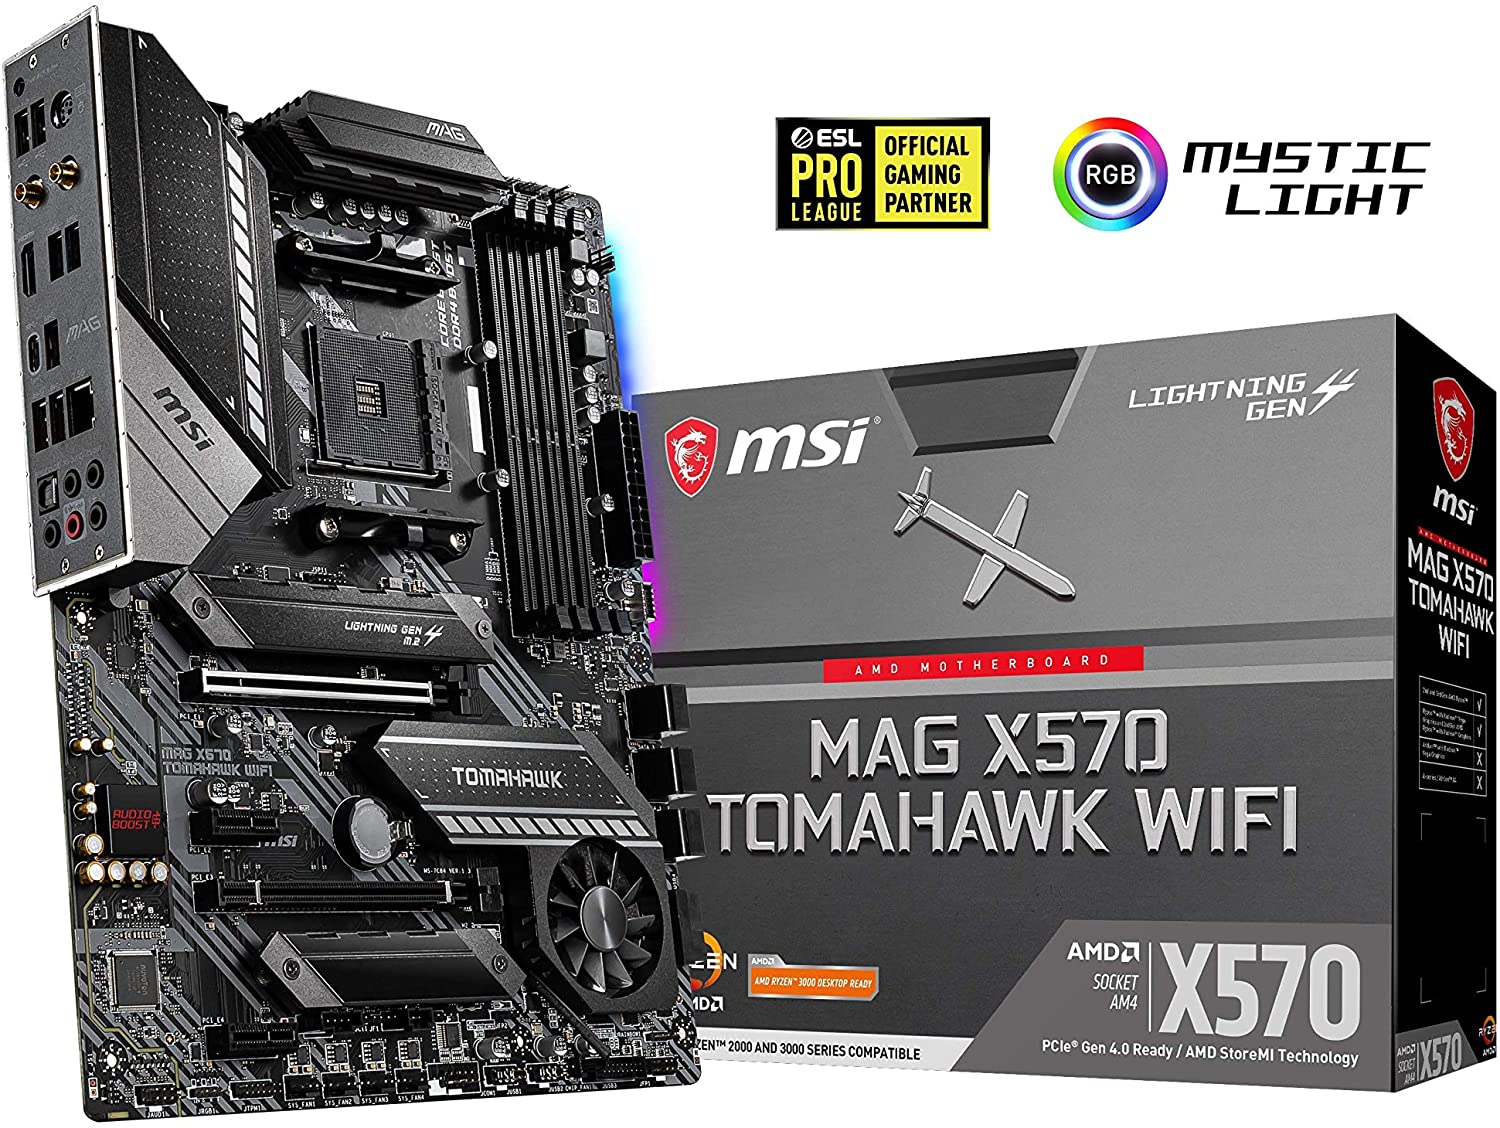 MSI MAG X570 TOMAHAWK WIFI Motherboard $220 + Free Shipping at Walmart